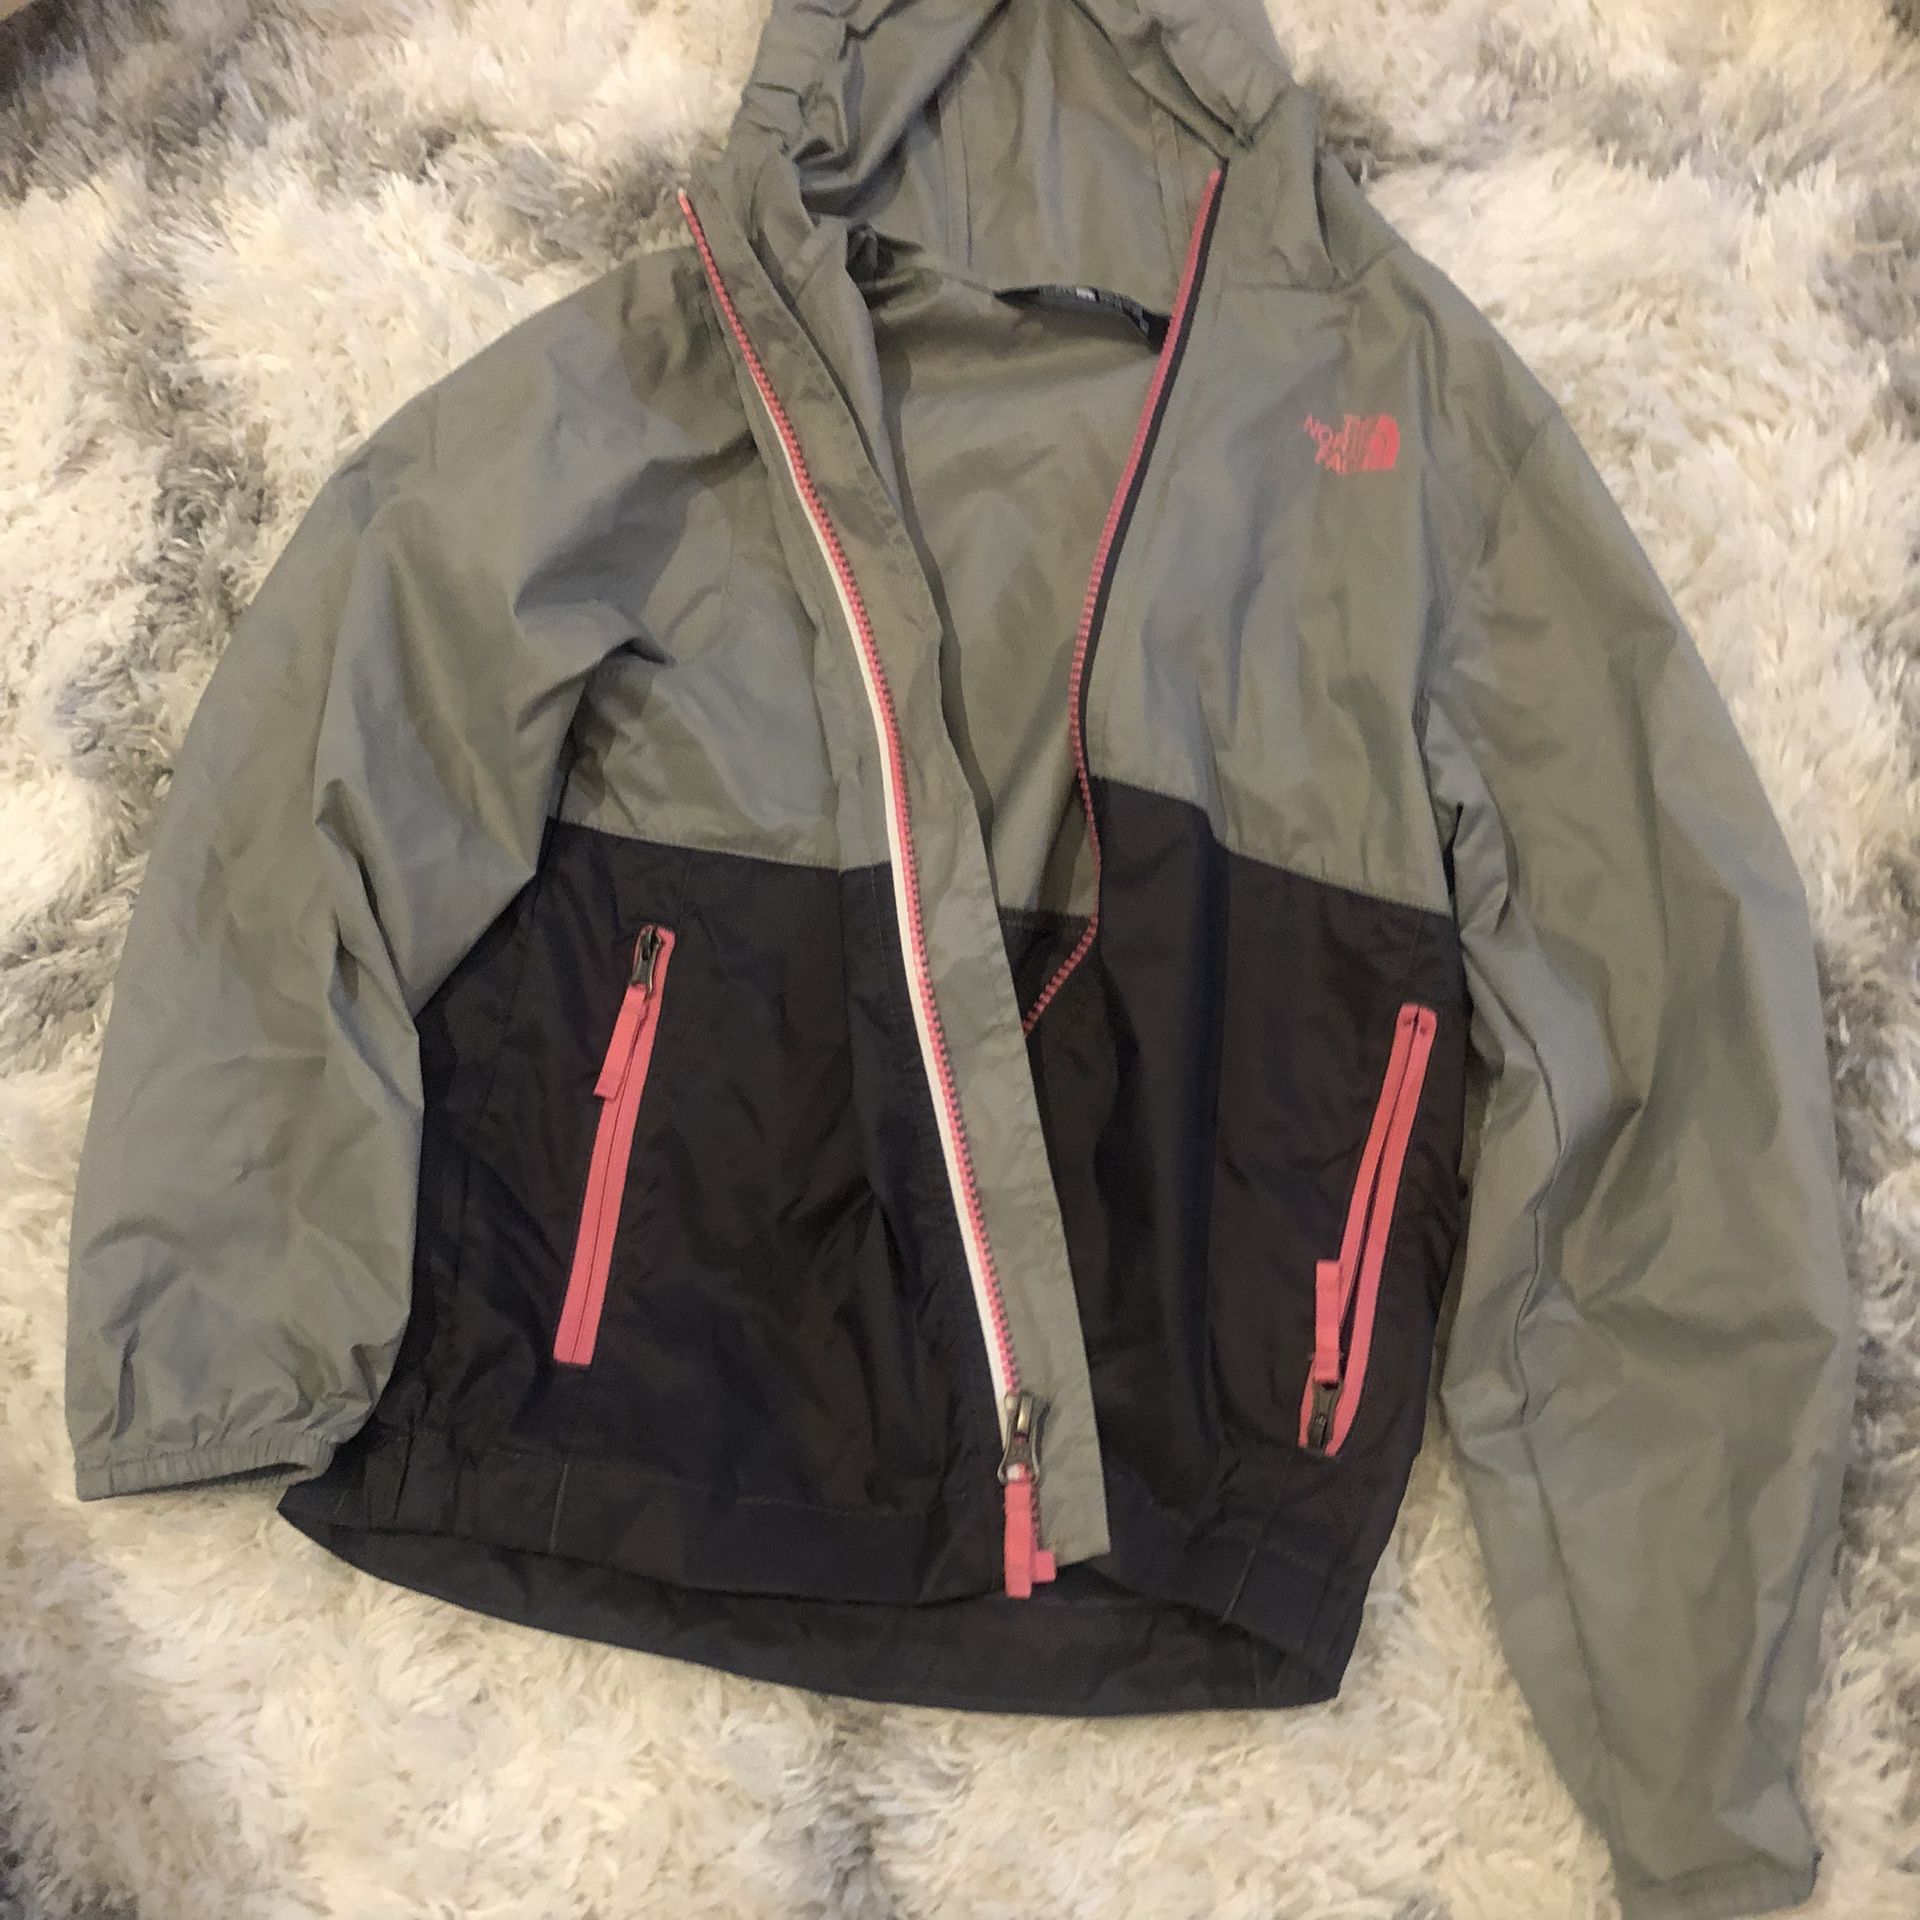 North Face Girl’s Rain Jacket Like New Size 6 